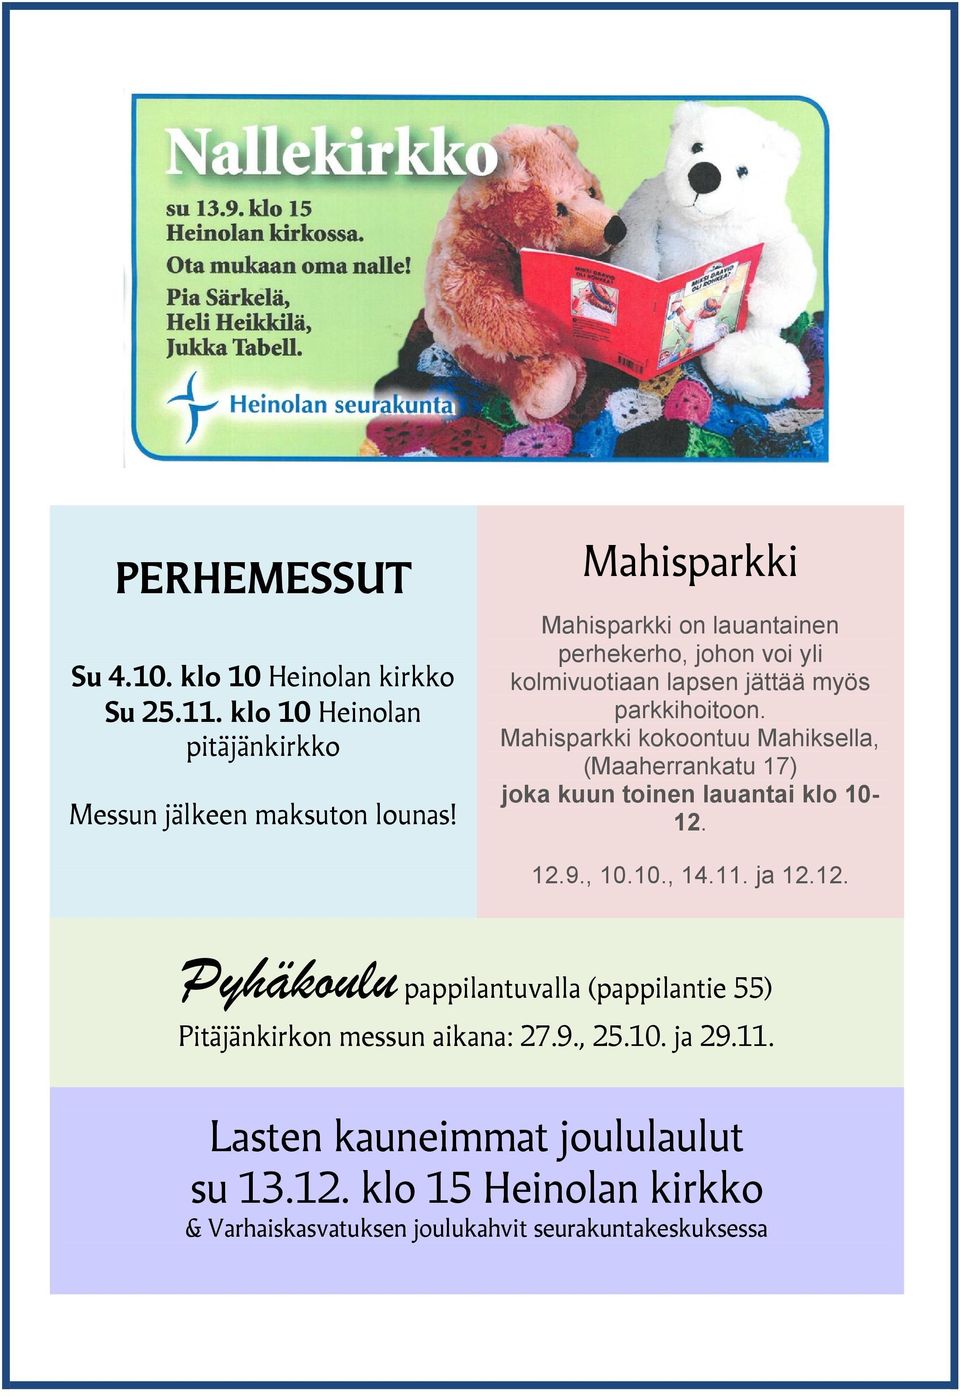 Mahisparkki kokoontuu Mahiksella, (Maaherrankatu 17) joka kuun toinen lauantai klo 10-12.